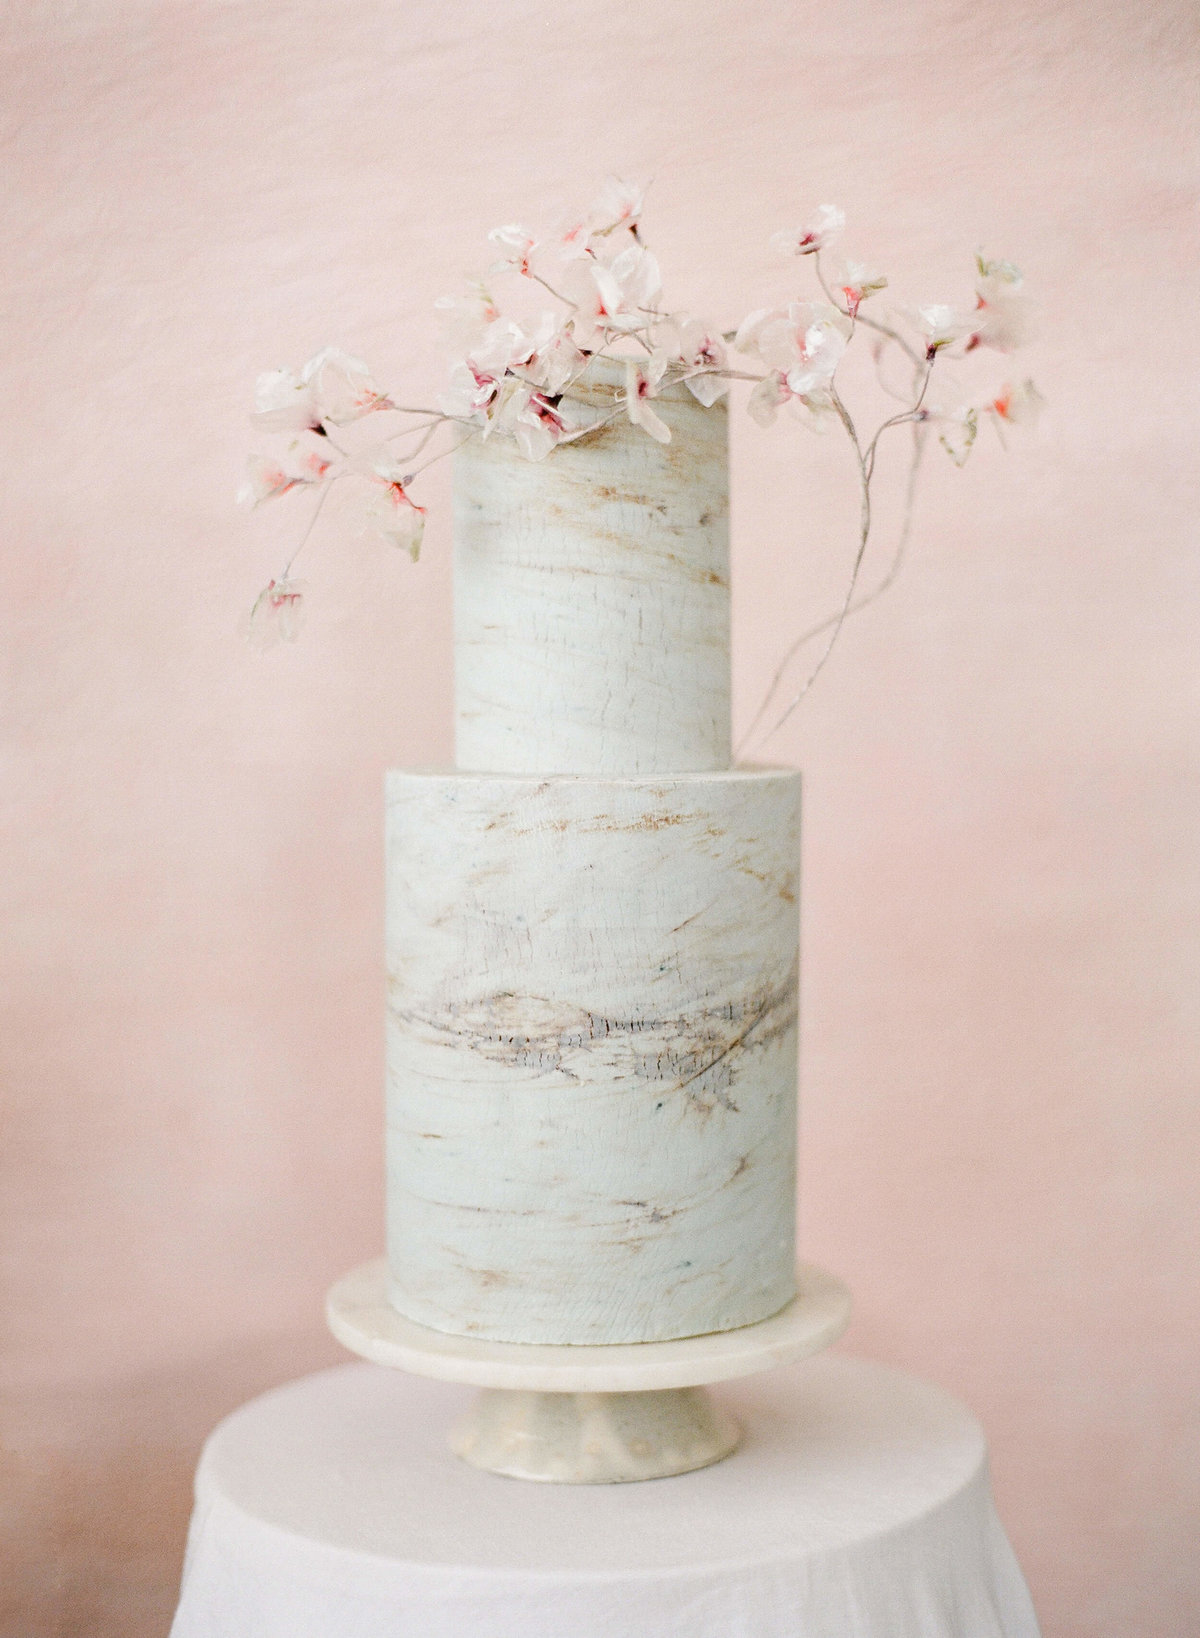 26-KTMerry-weddings-cake-tree-bark